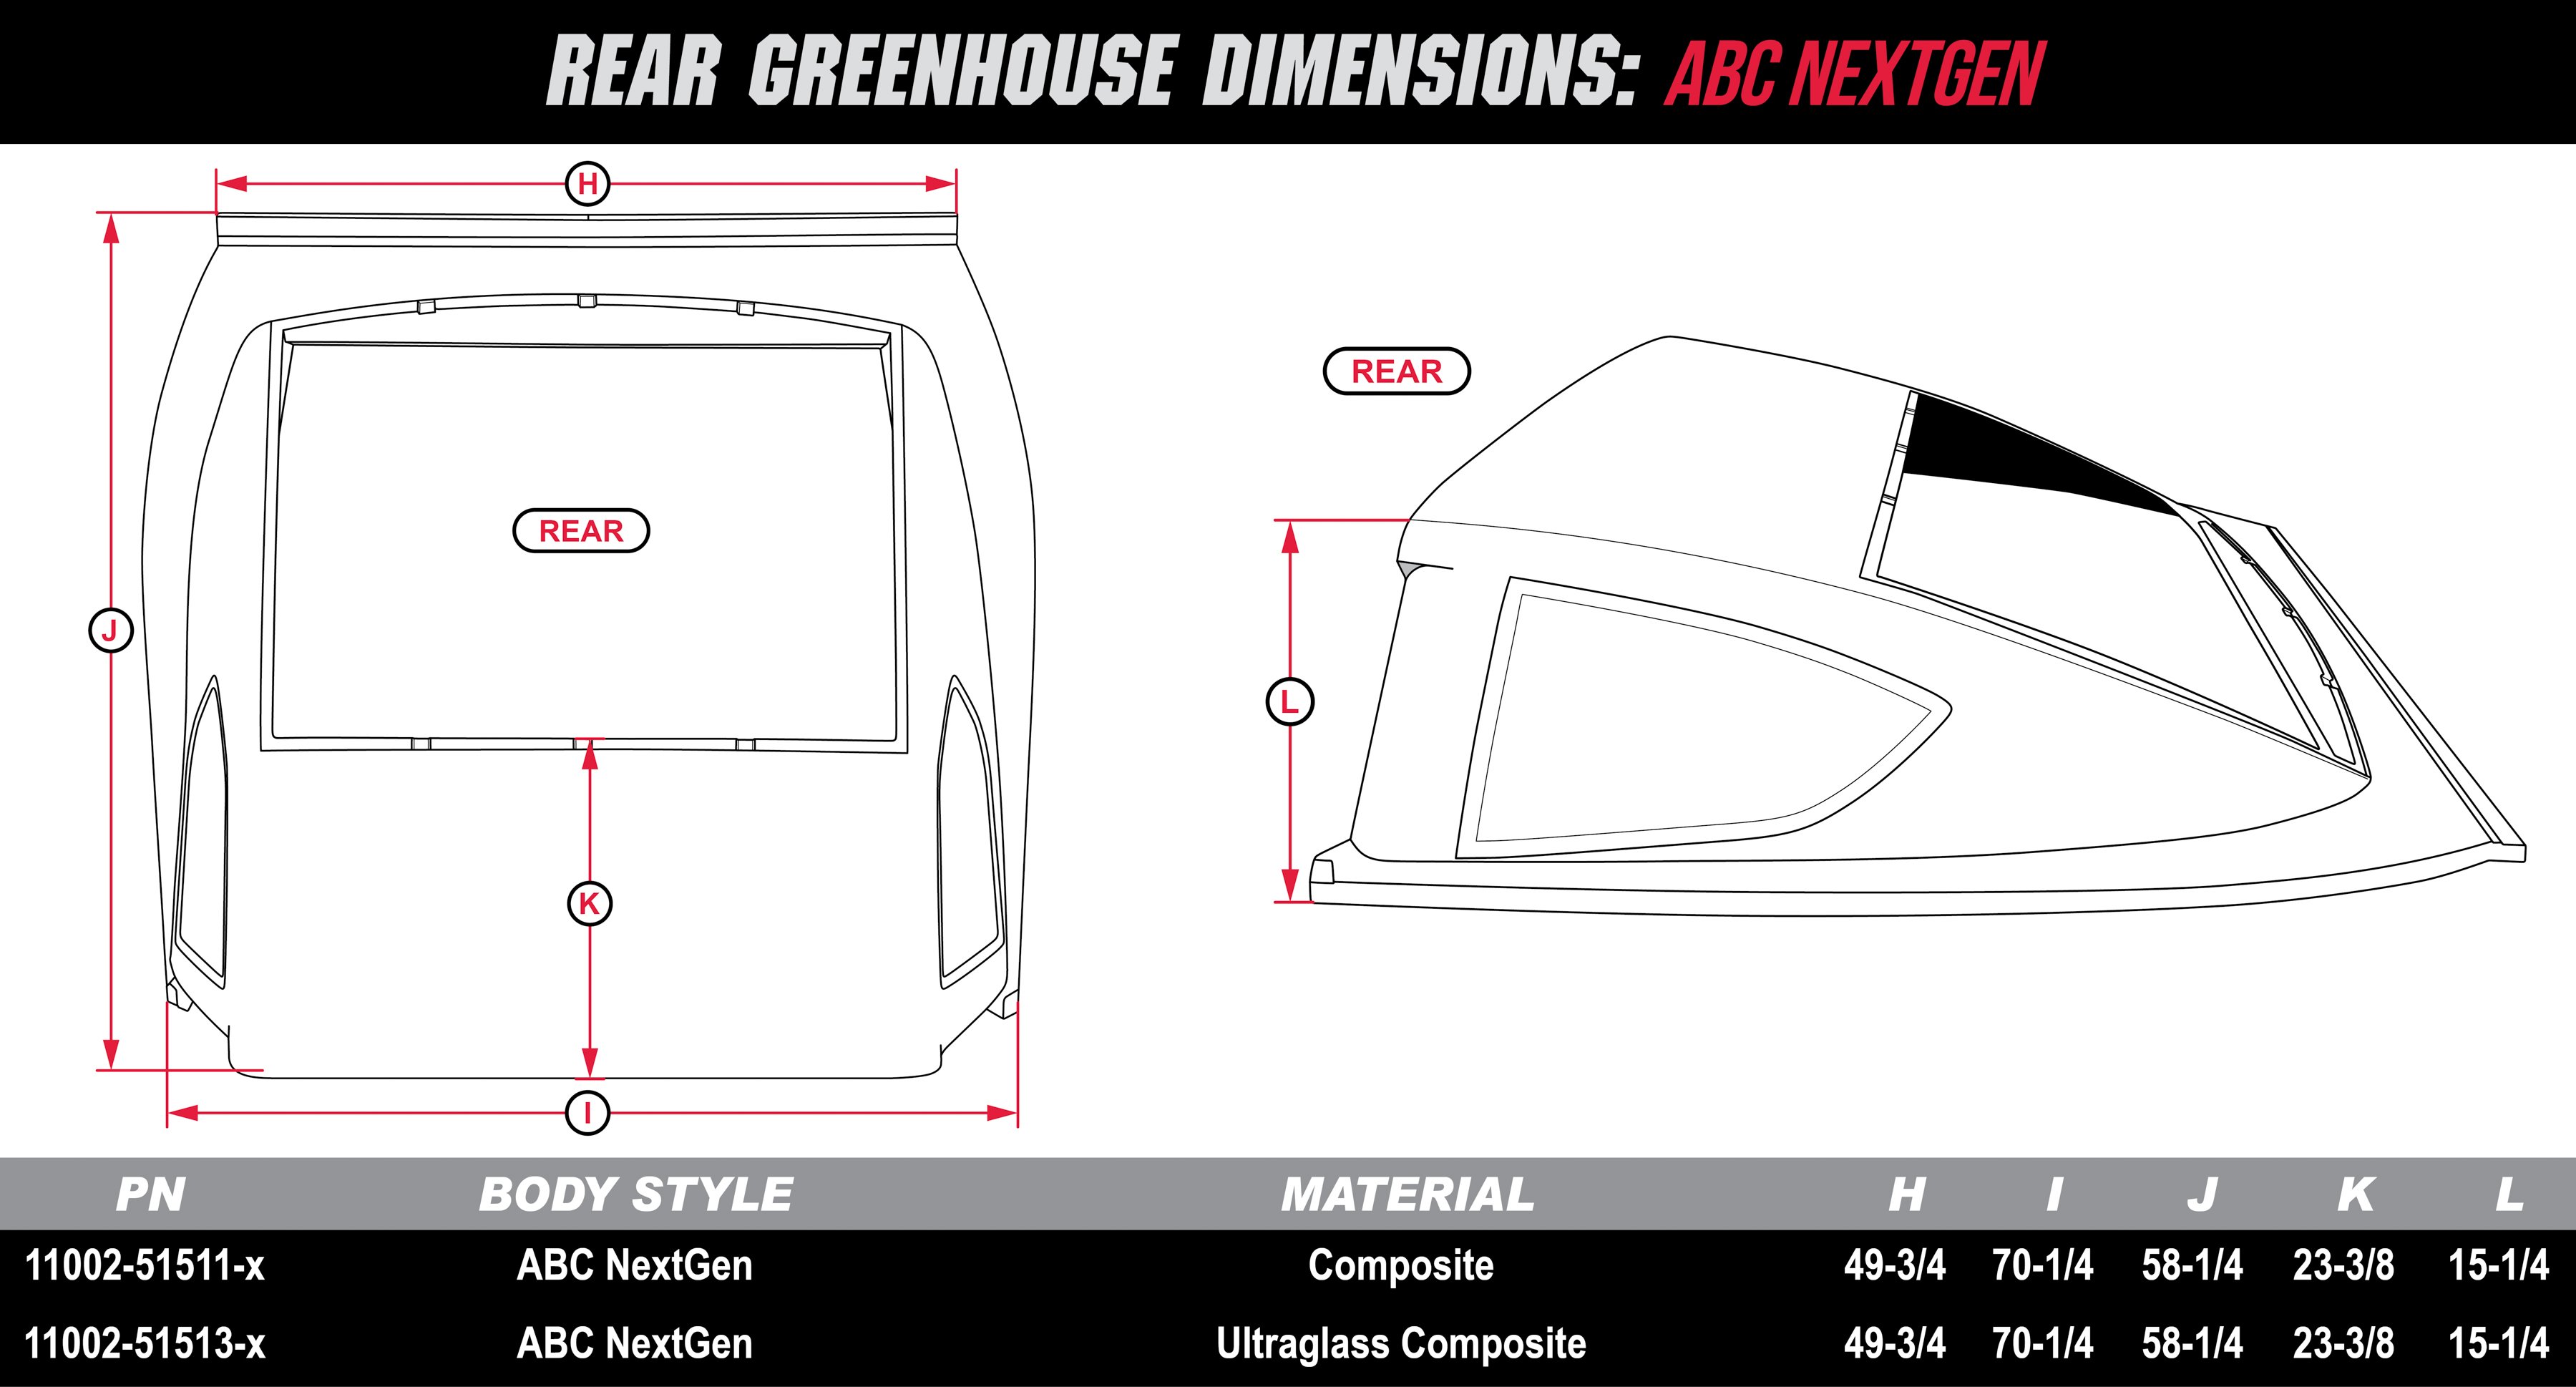 rear dimensions